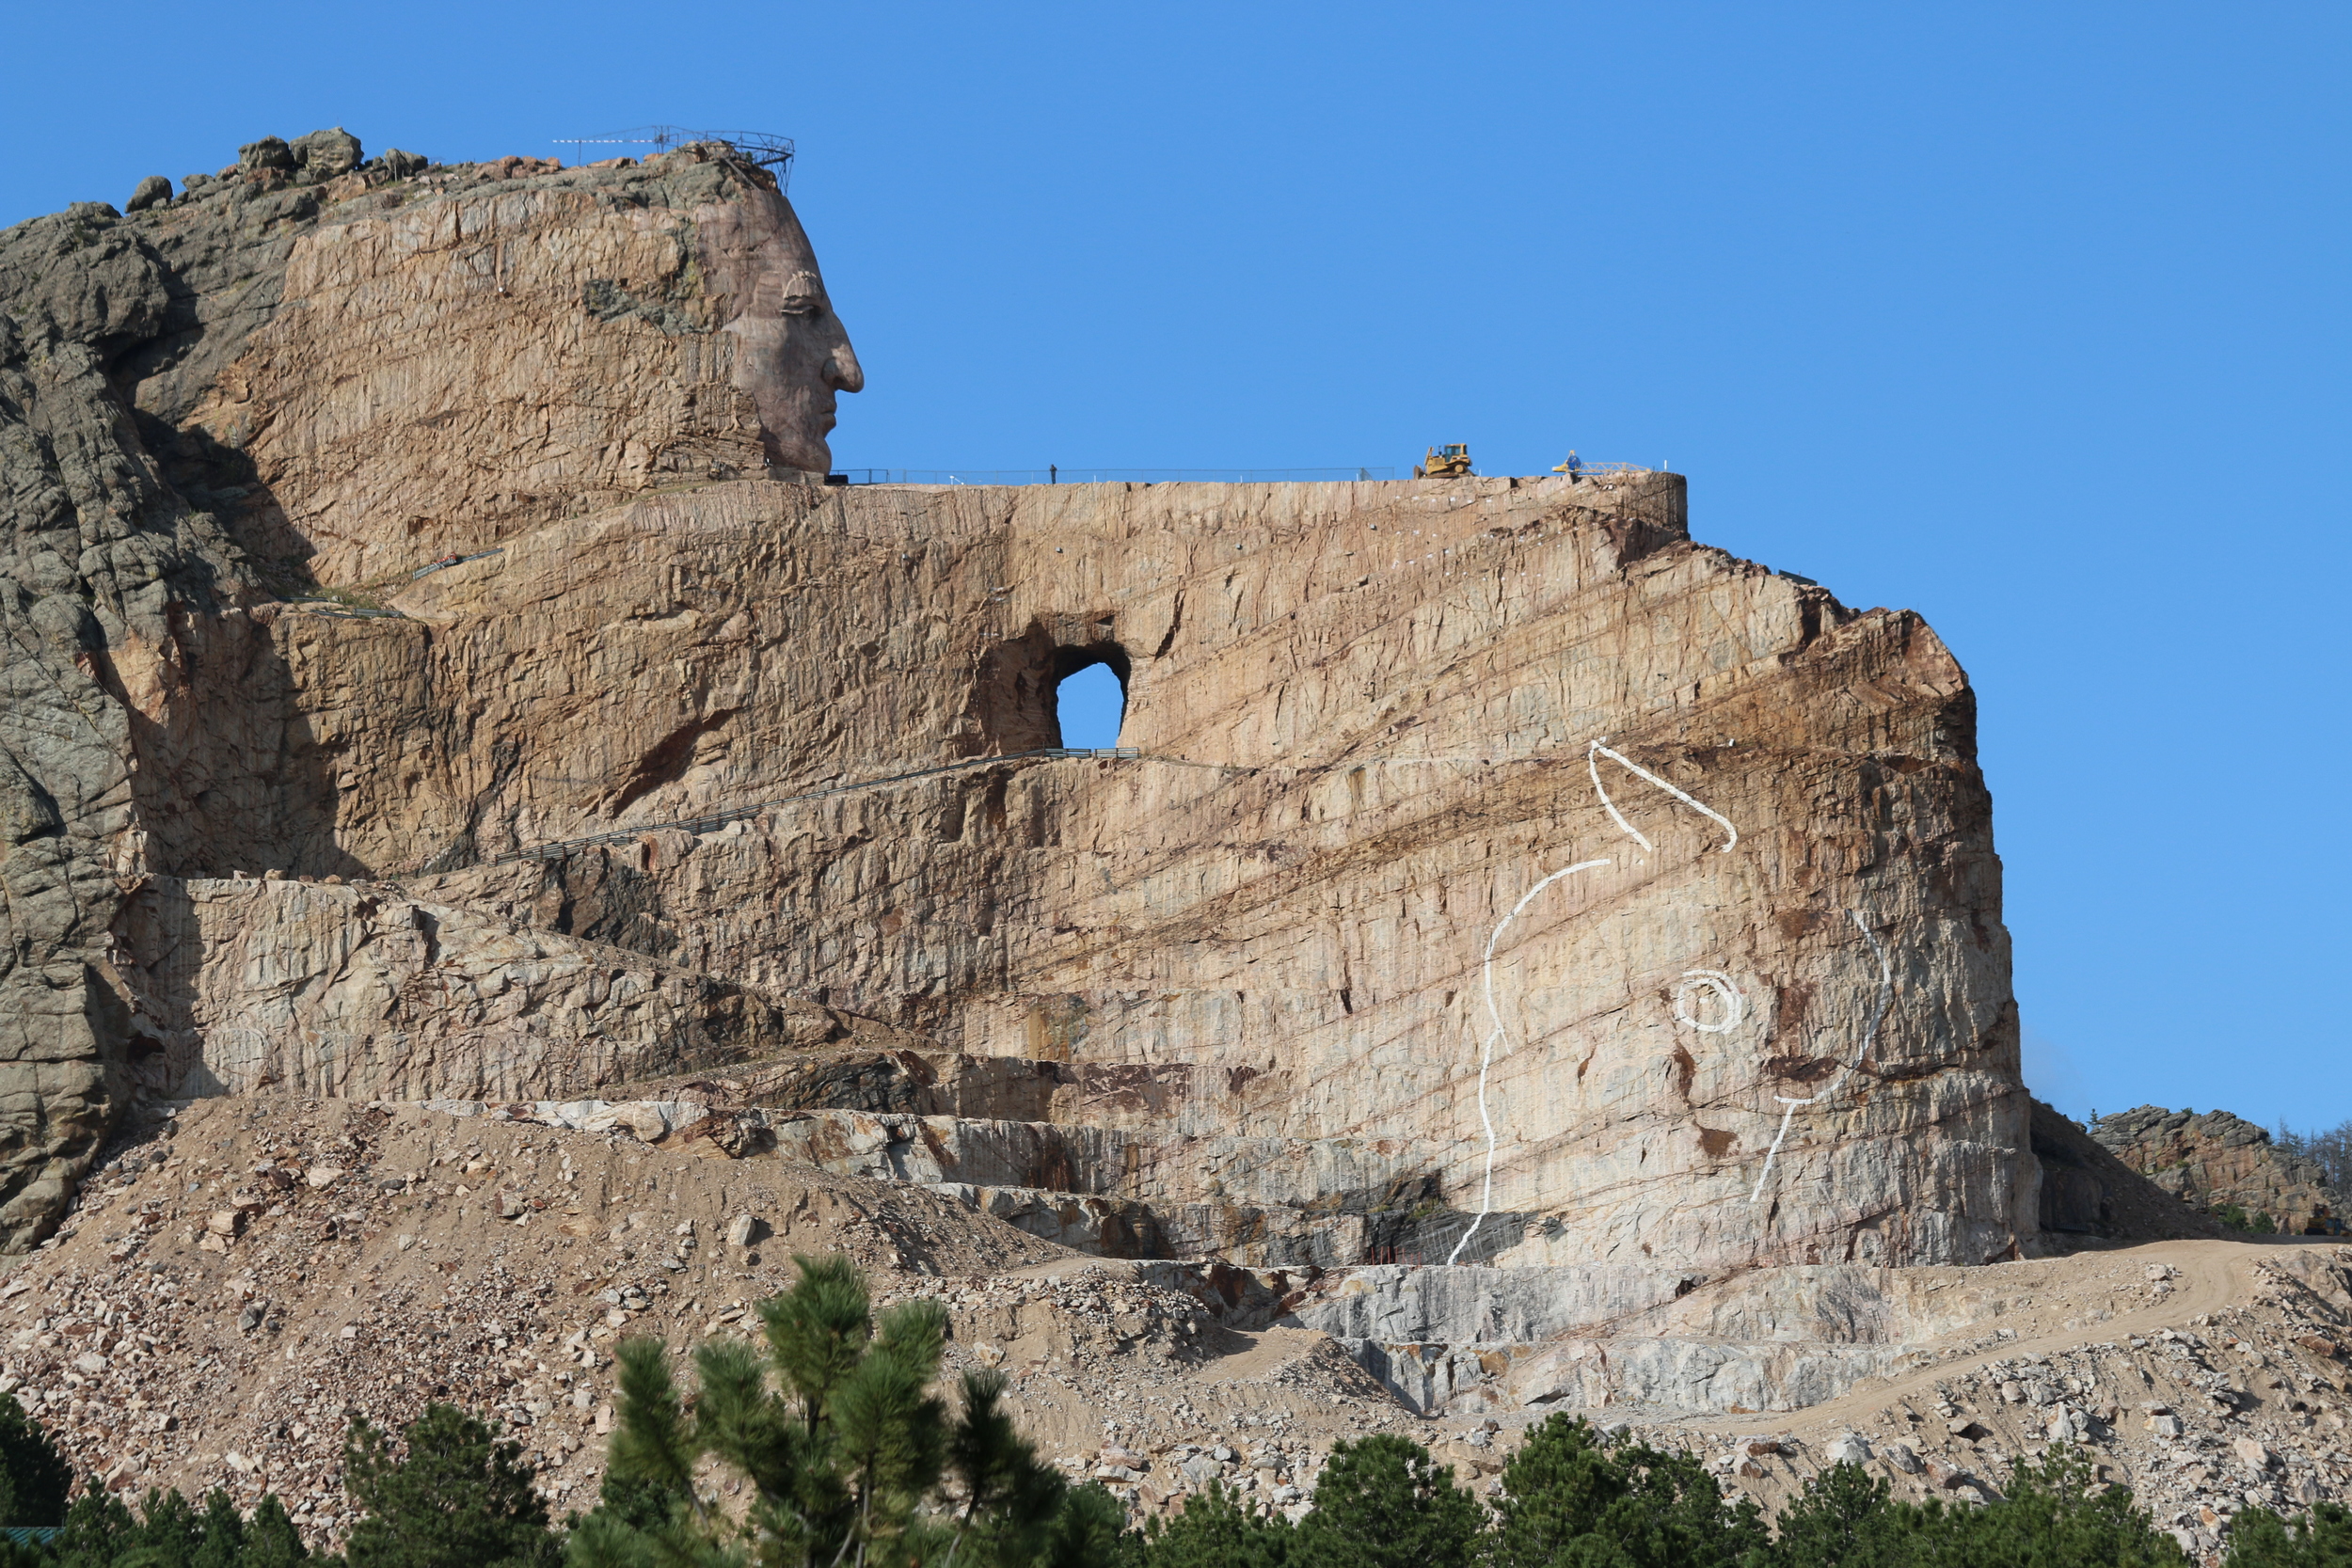 Crazy Horse Memorial, Black Hills, SD.